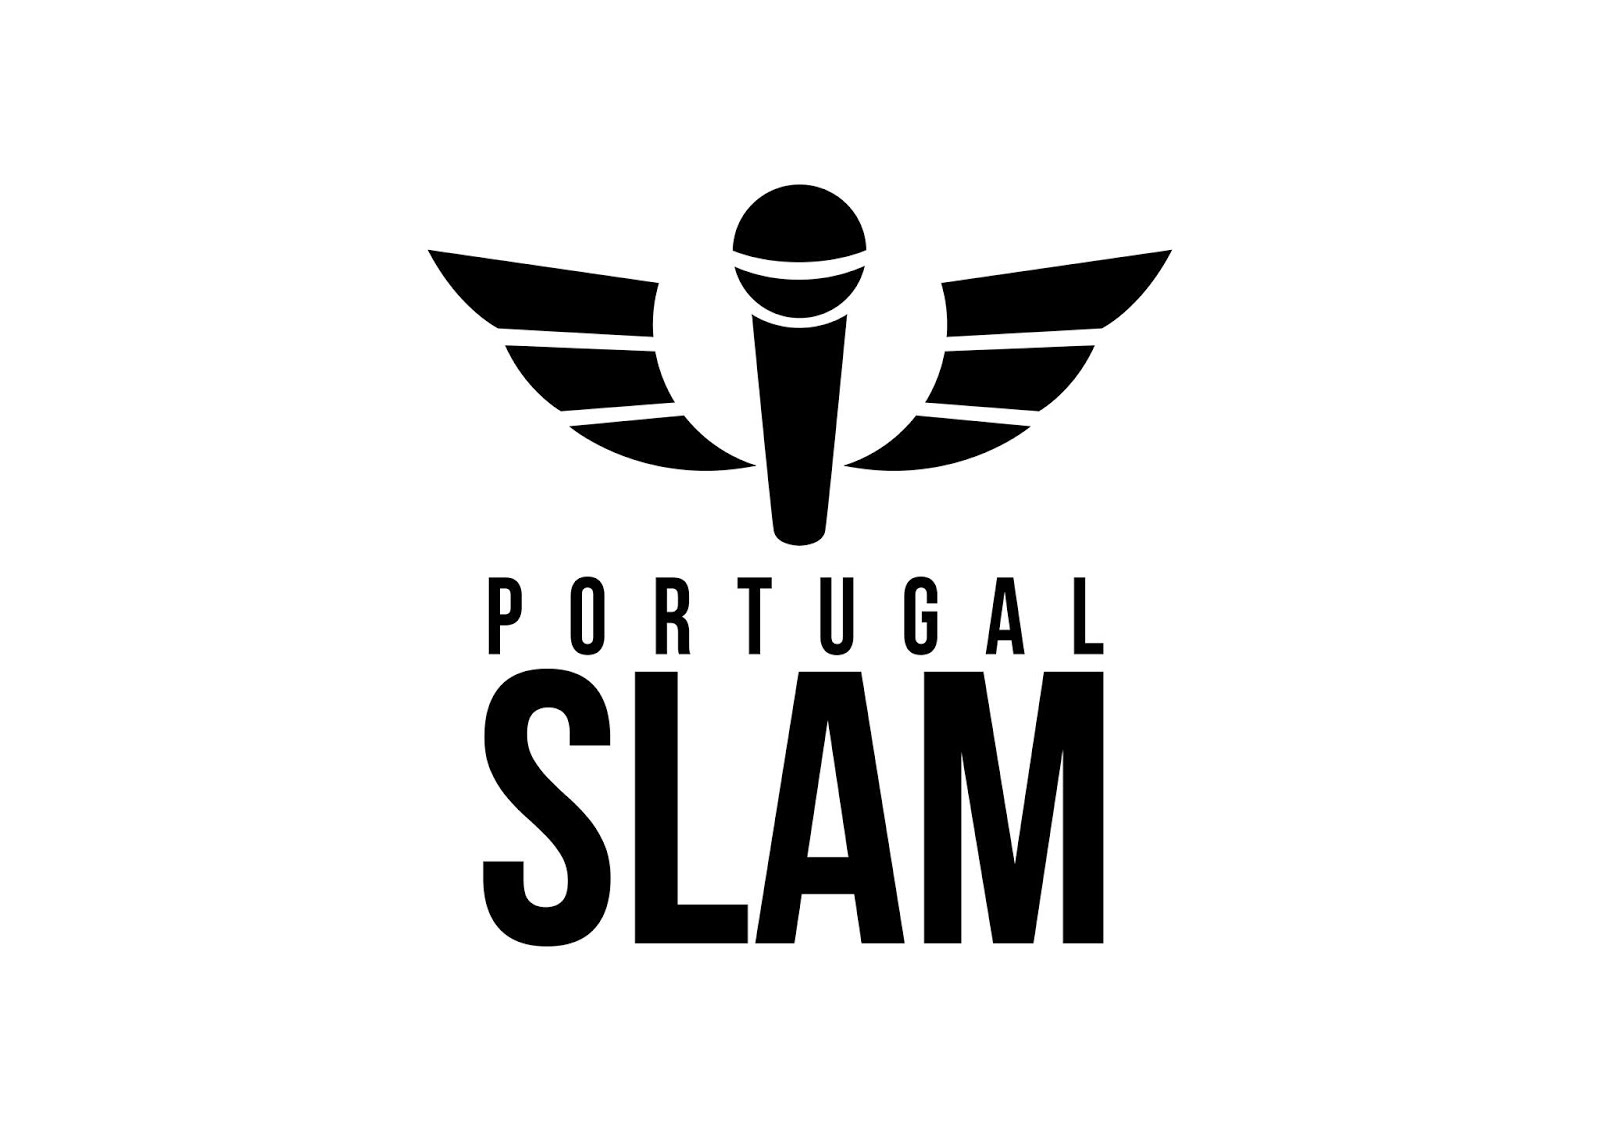 PORTUGAL SLAM!